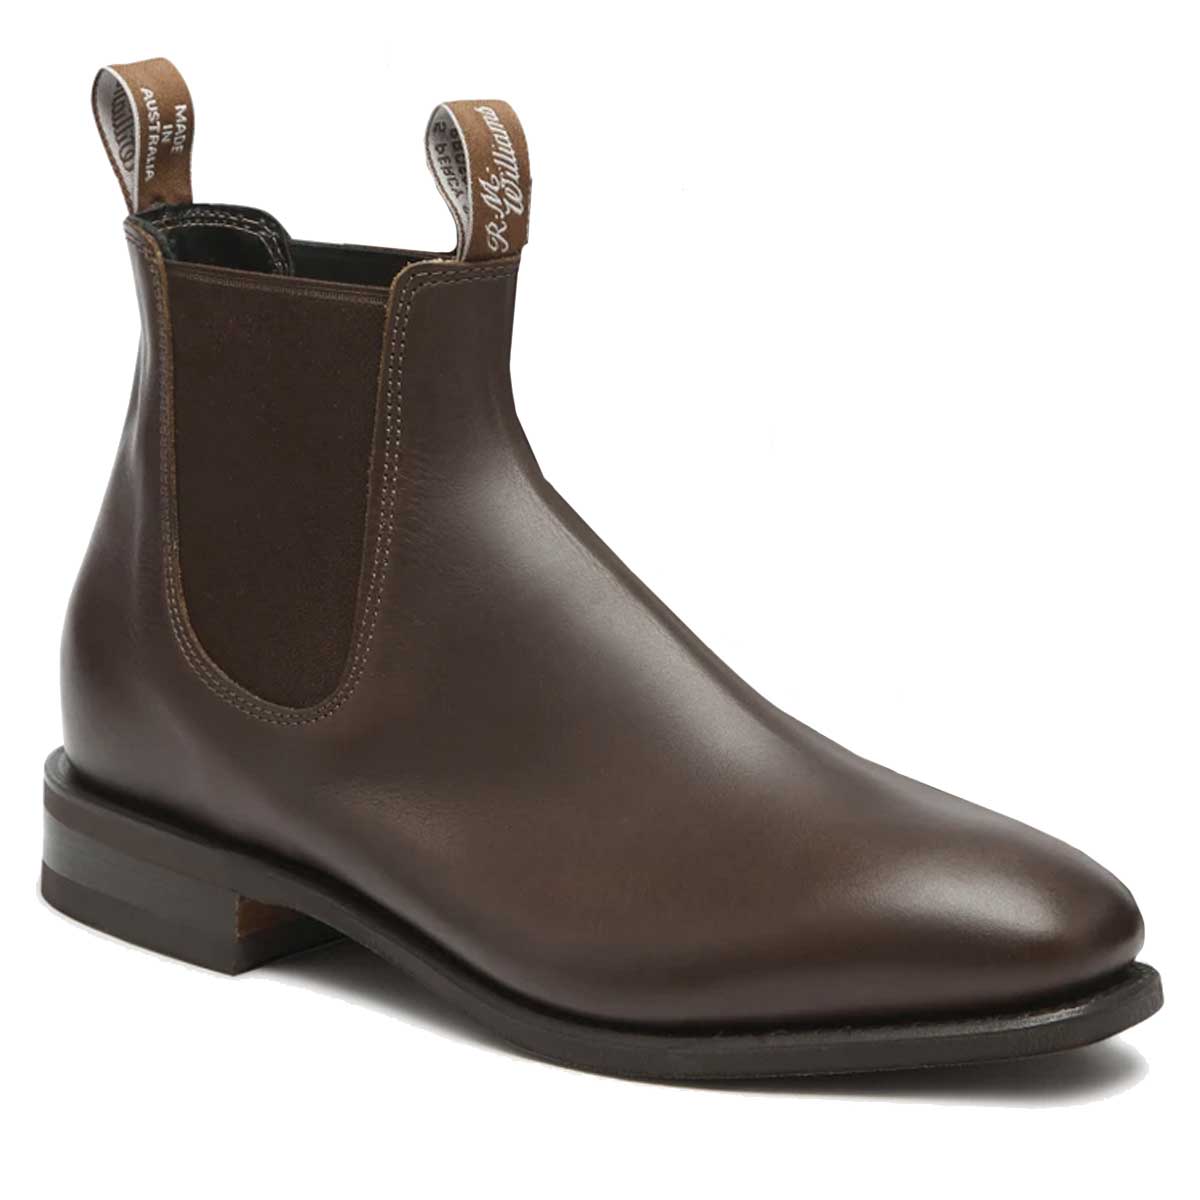 RM WILLIAMS Comfort Craftsman Boots - Men's - Rum